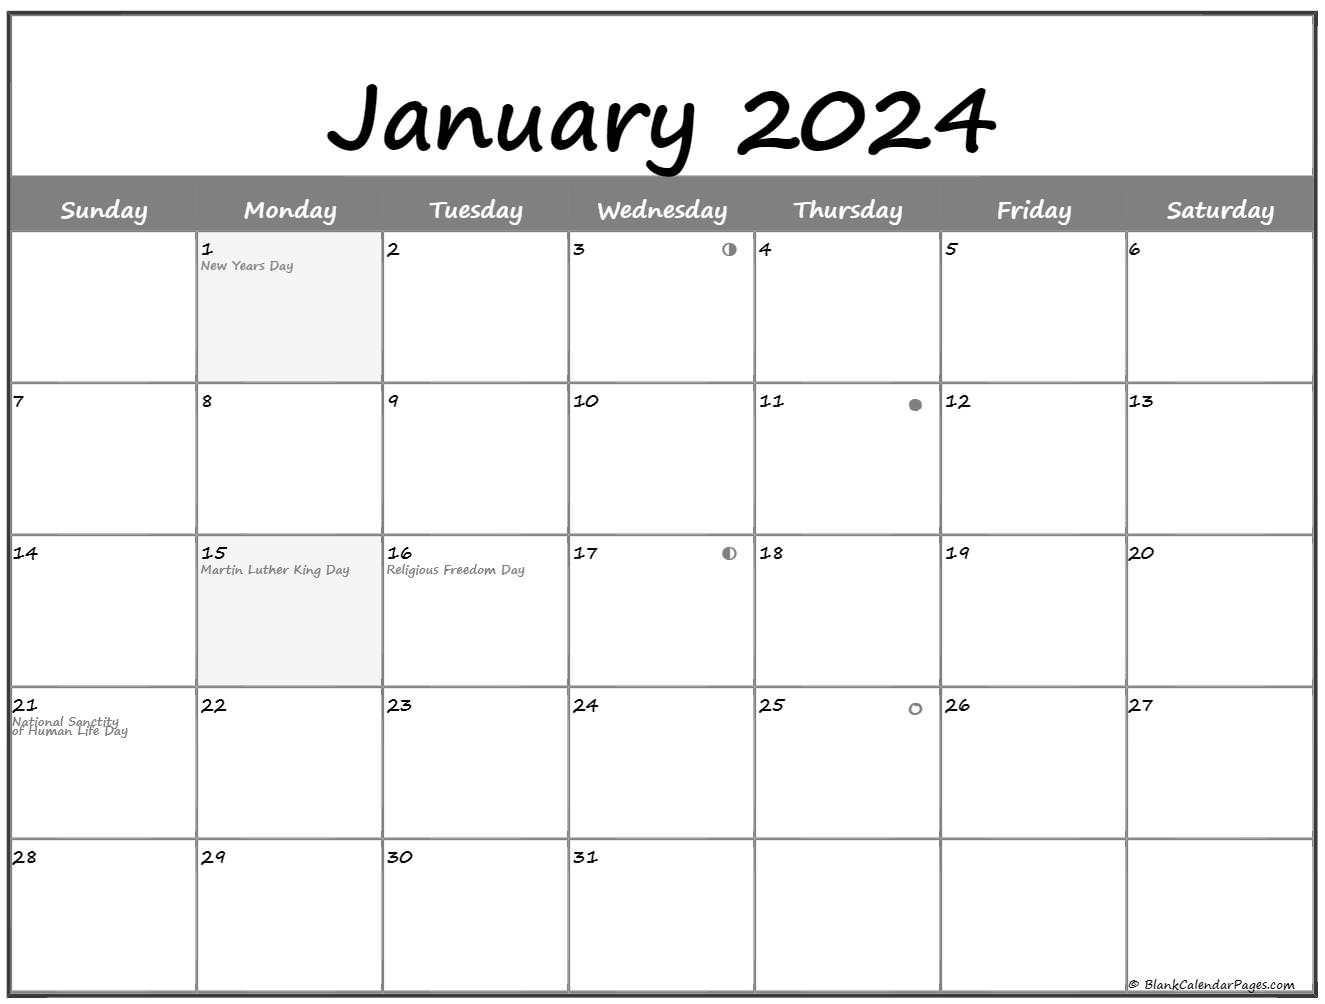 Lunar Calendar January 2022 January 2022 Lunar Calendar | Moon Phase Calendar